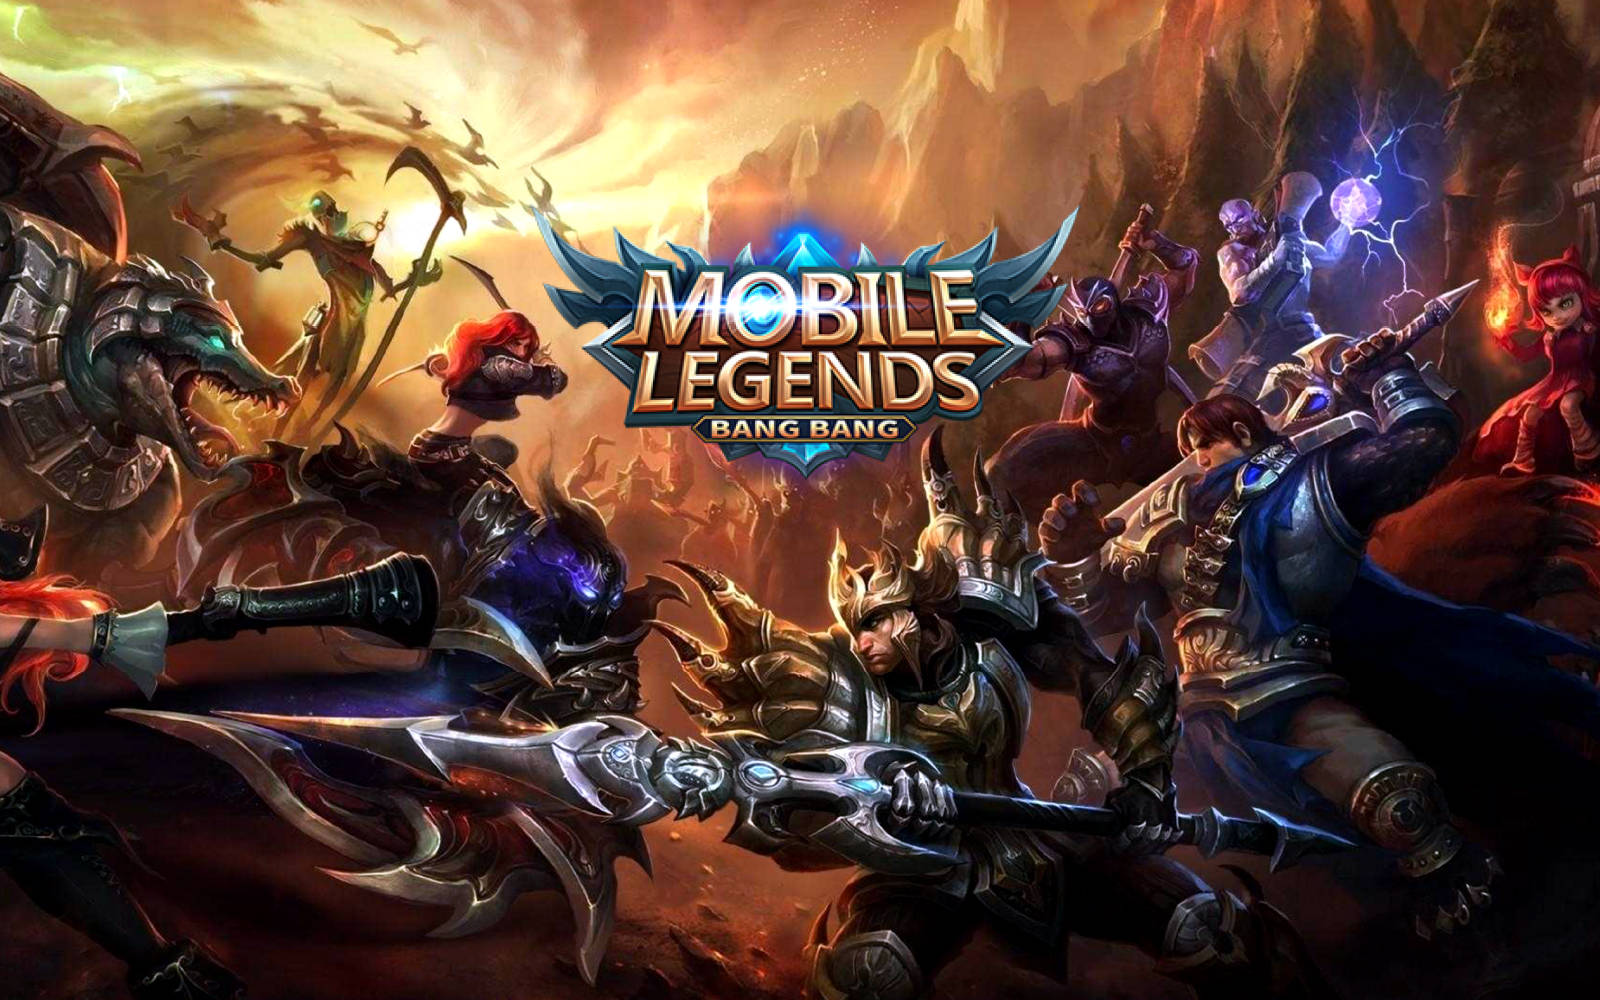 Free Mobile Legends Logo Wallpaper Downloads, Mobile Legends Logo Wallpaper for FREE